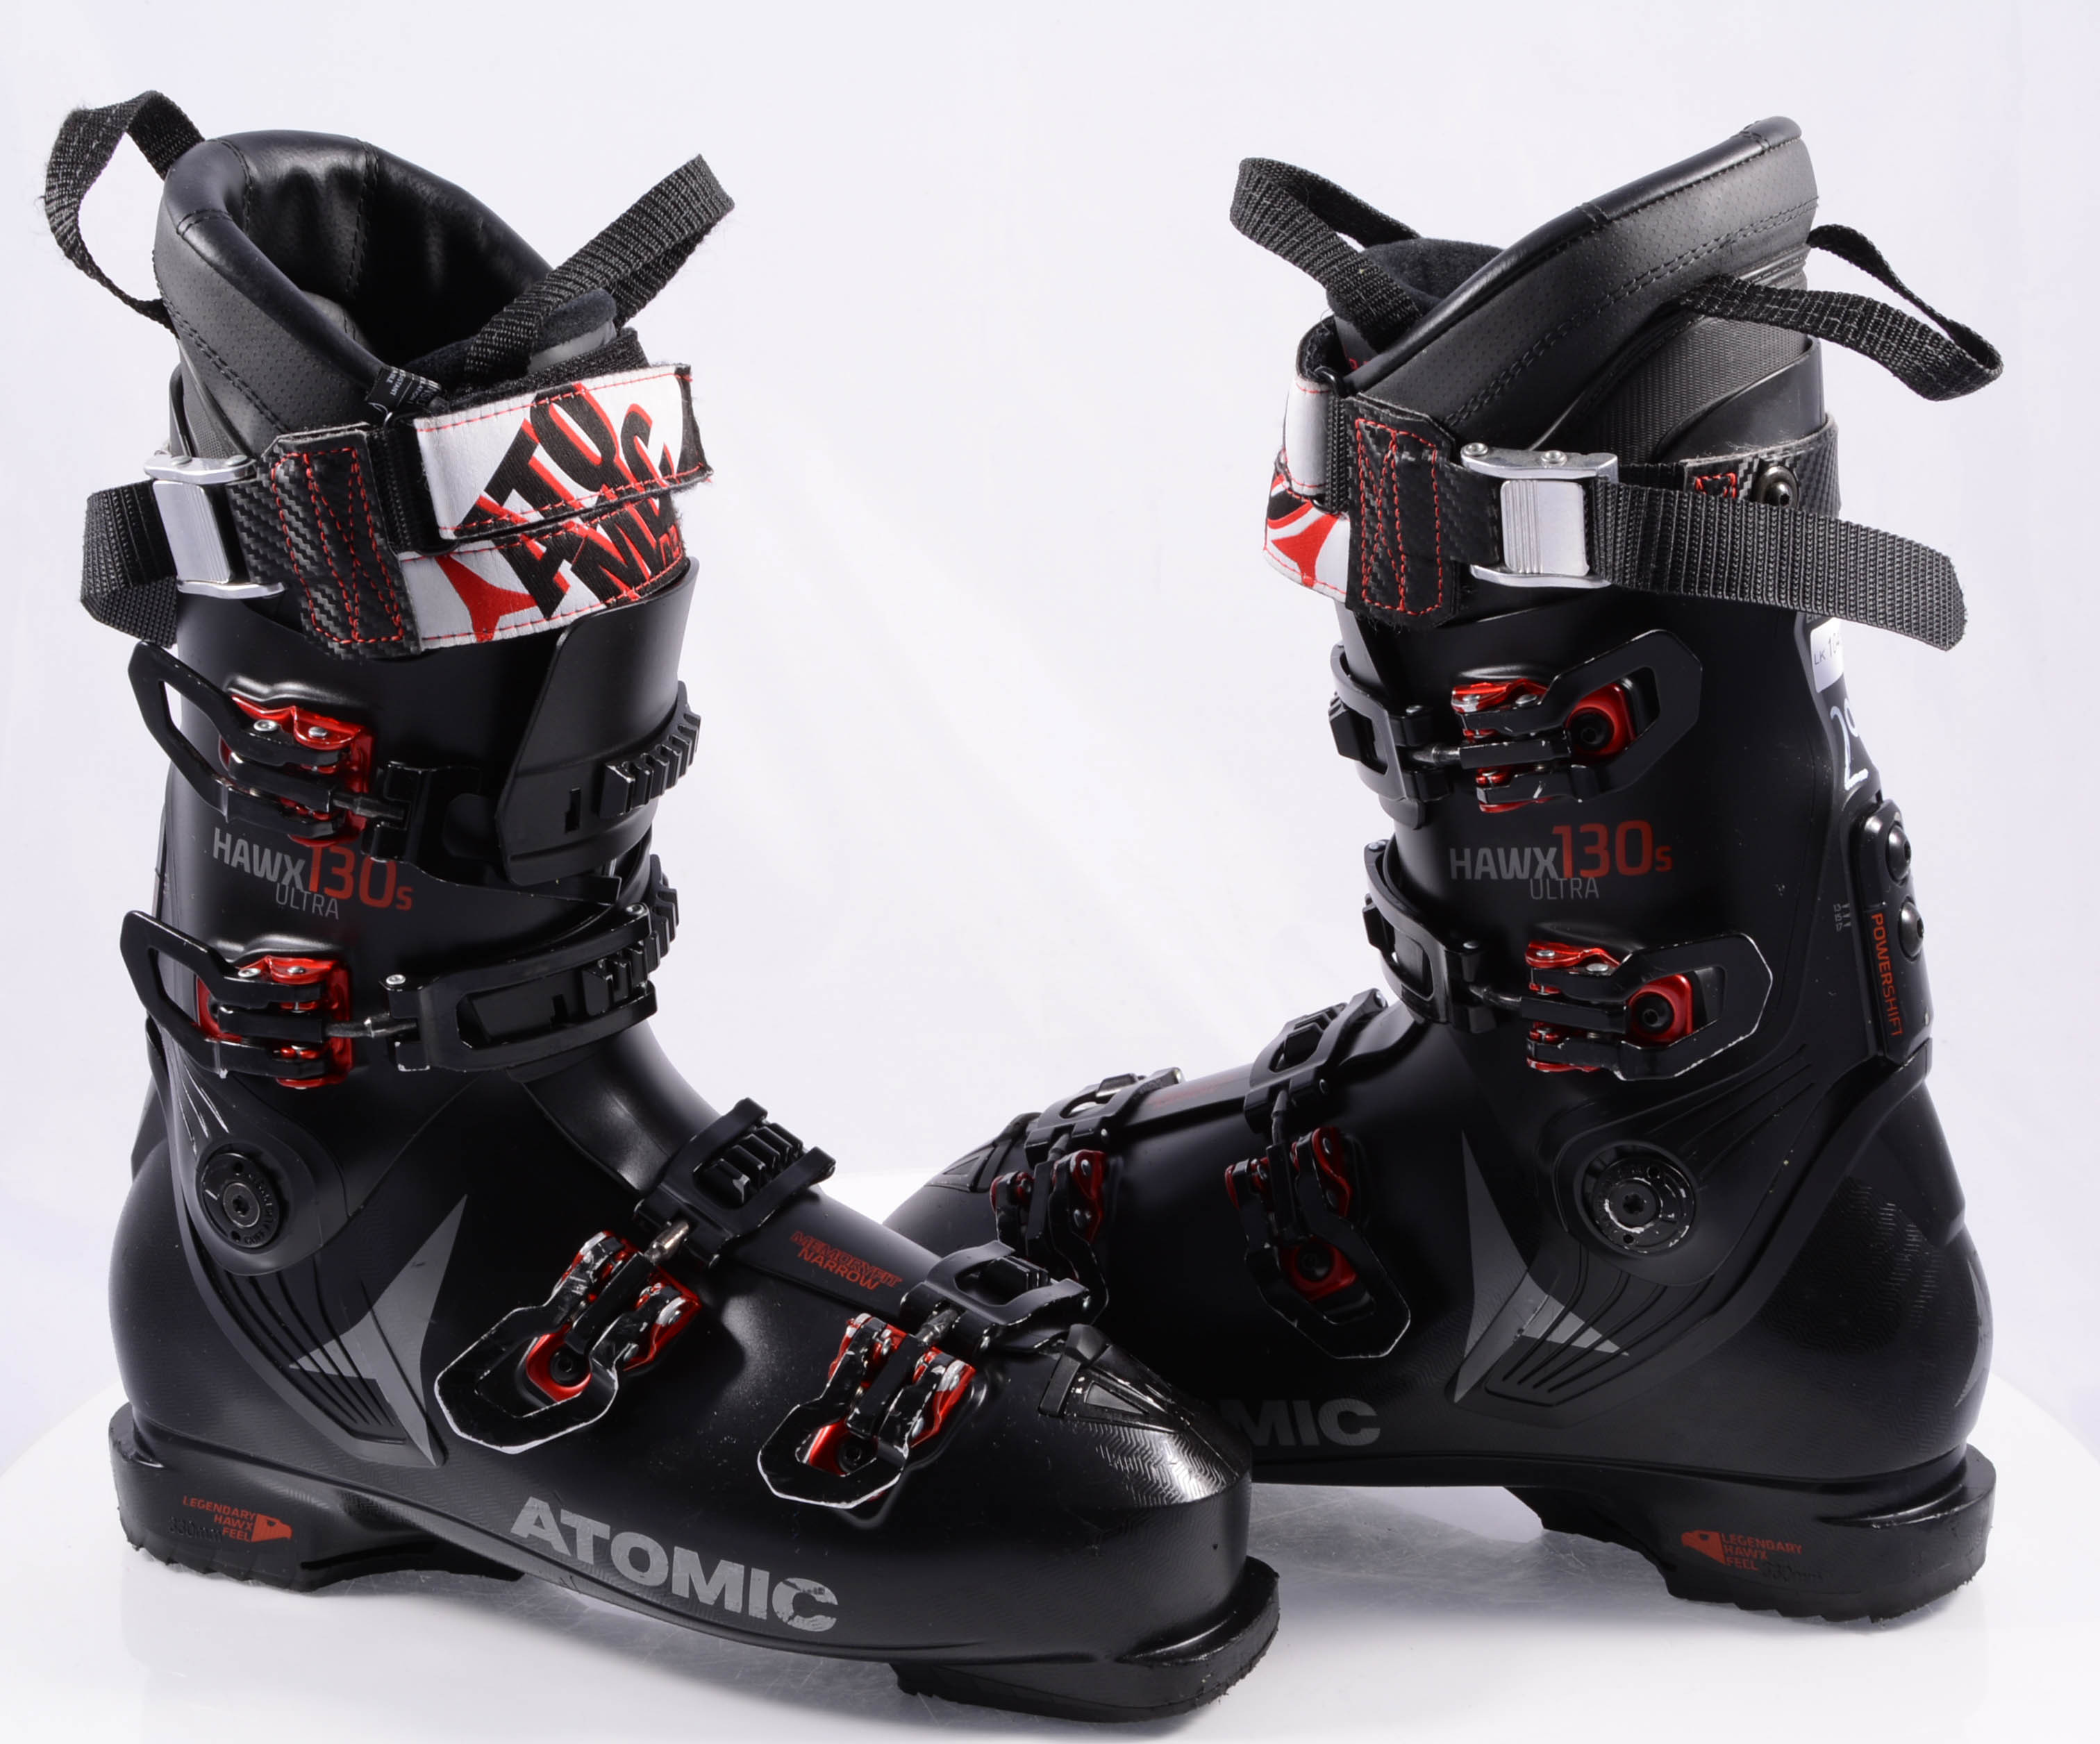 ski boots ATOMIC HAWX 130 S ULTRA, memory fit, energy backbone